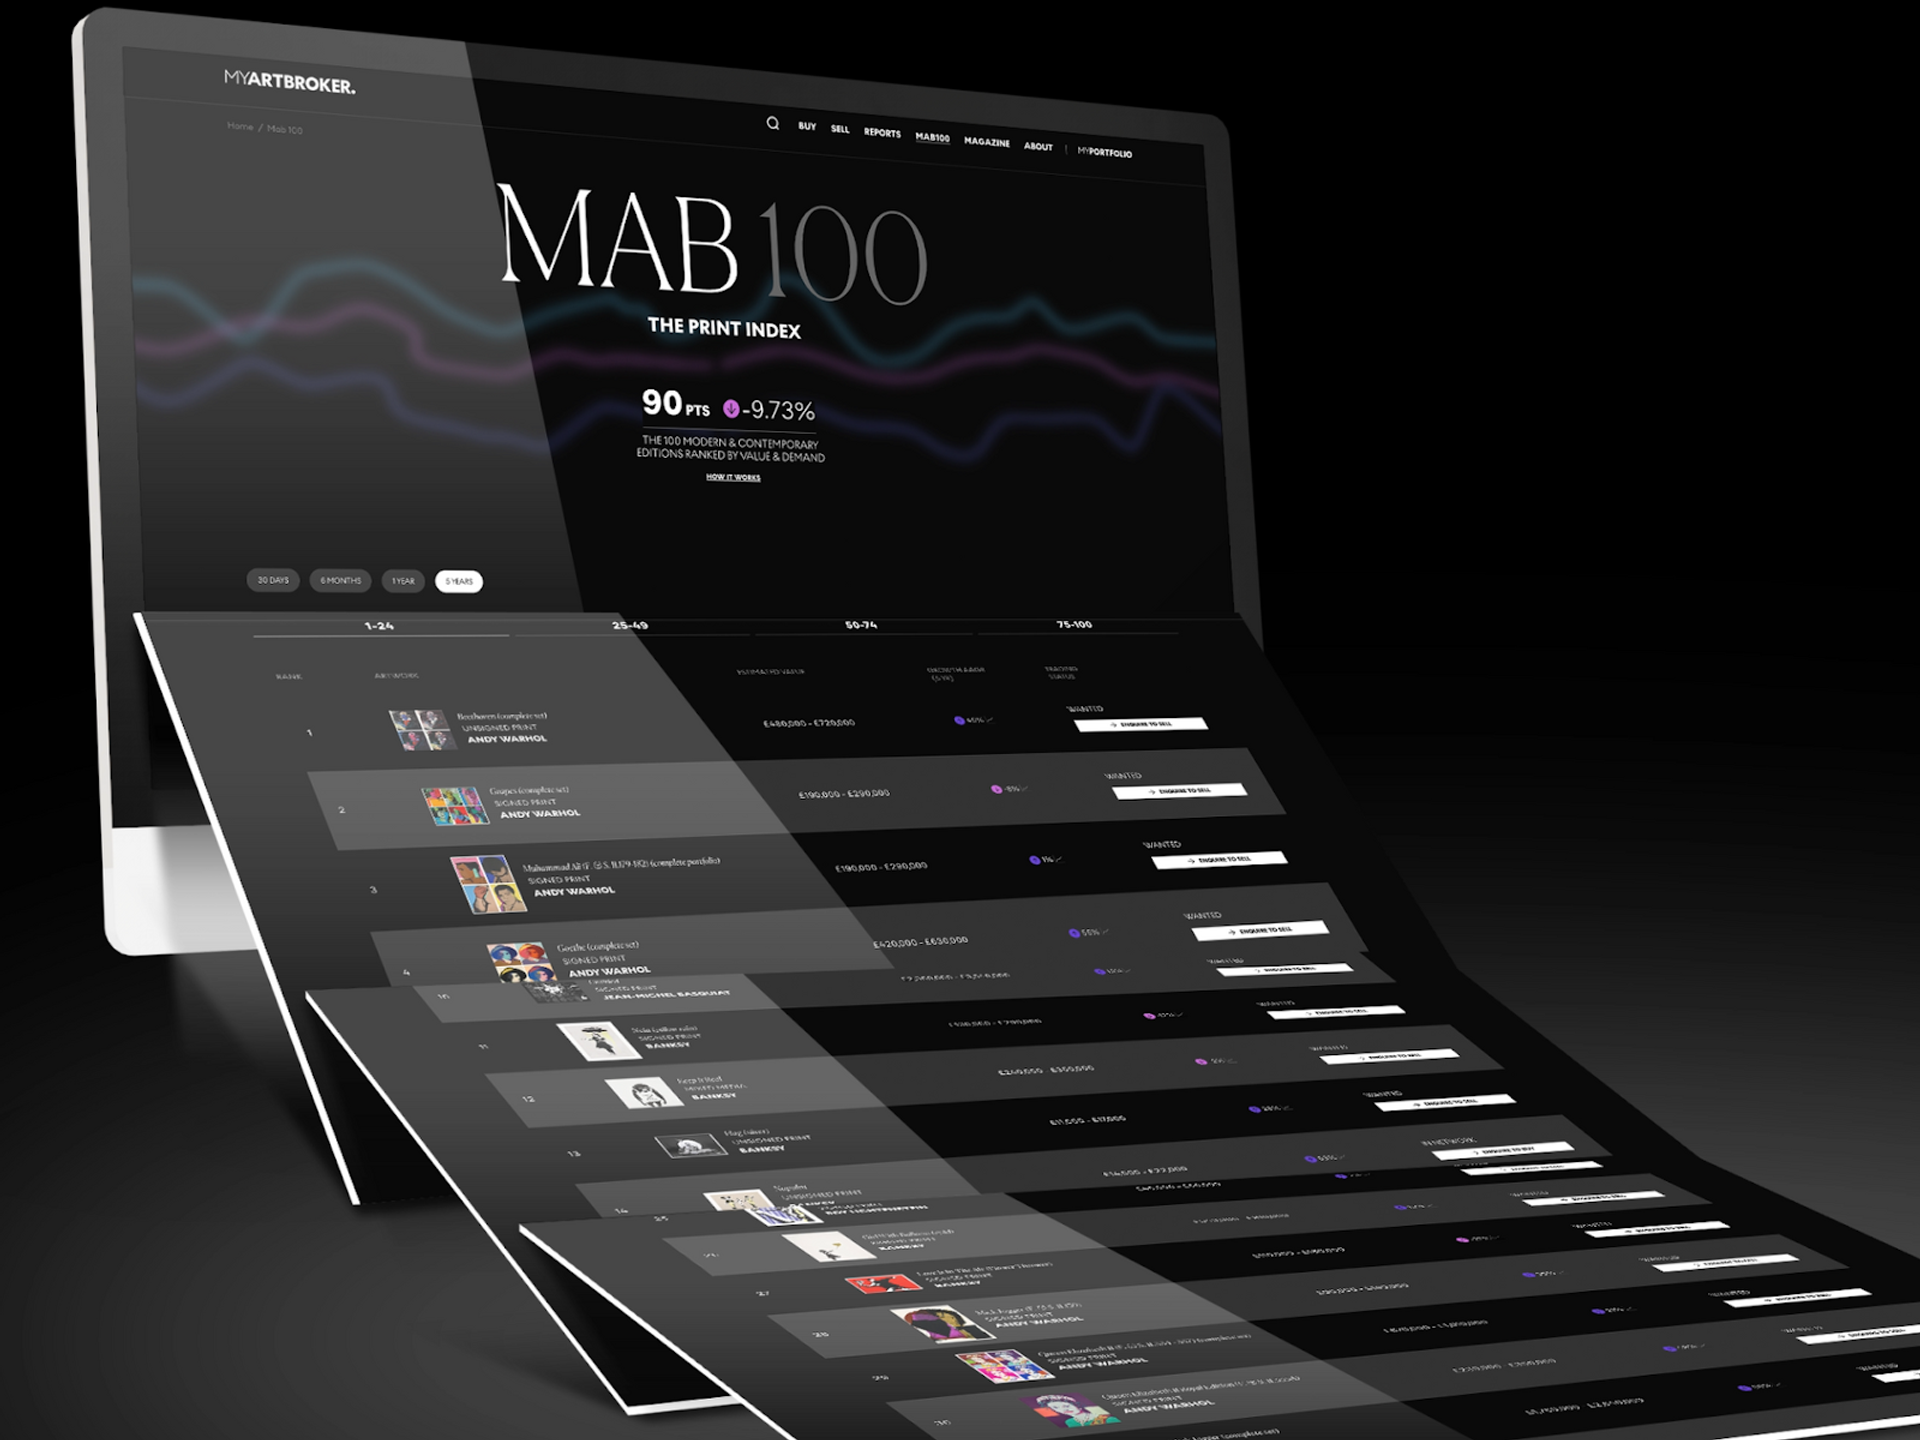 MyArtBroker’s MAB100 Print Market Index Dashboard seen from a computer monitor.